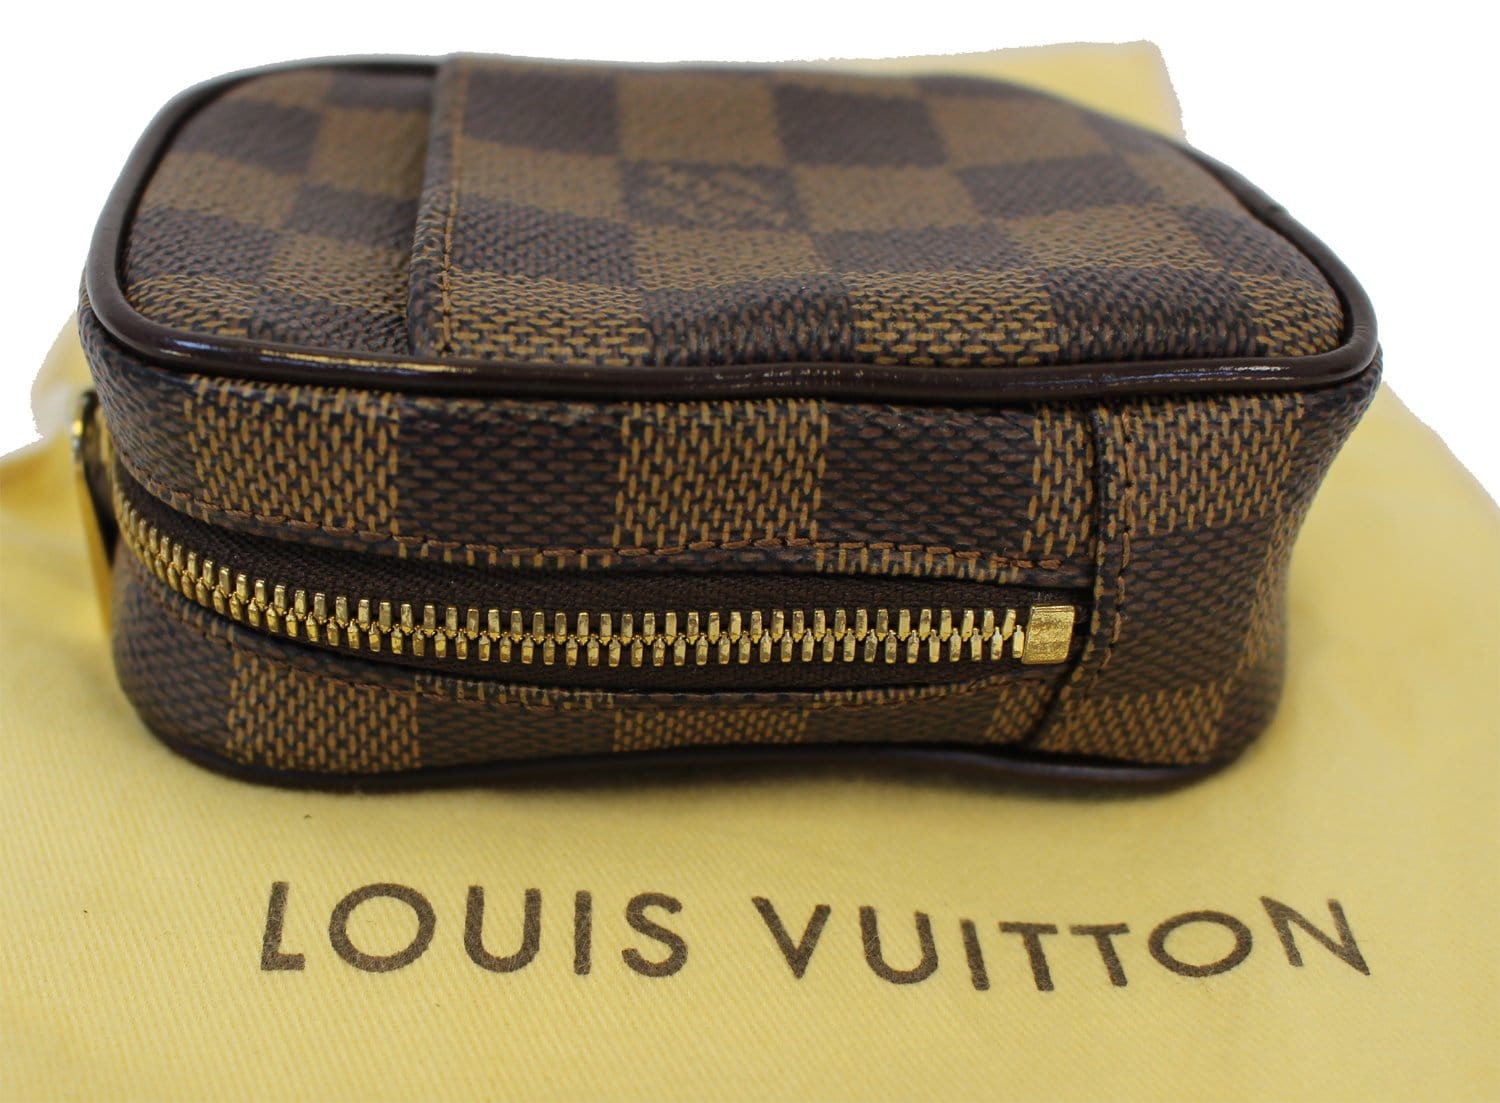 Louis Vuitton Vintage - Damier Ebene Wristlet Bag Pouch - Brown